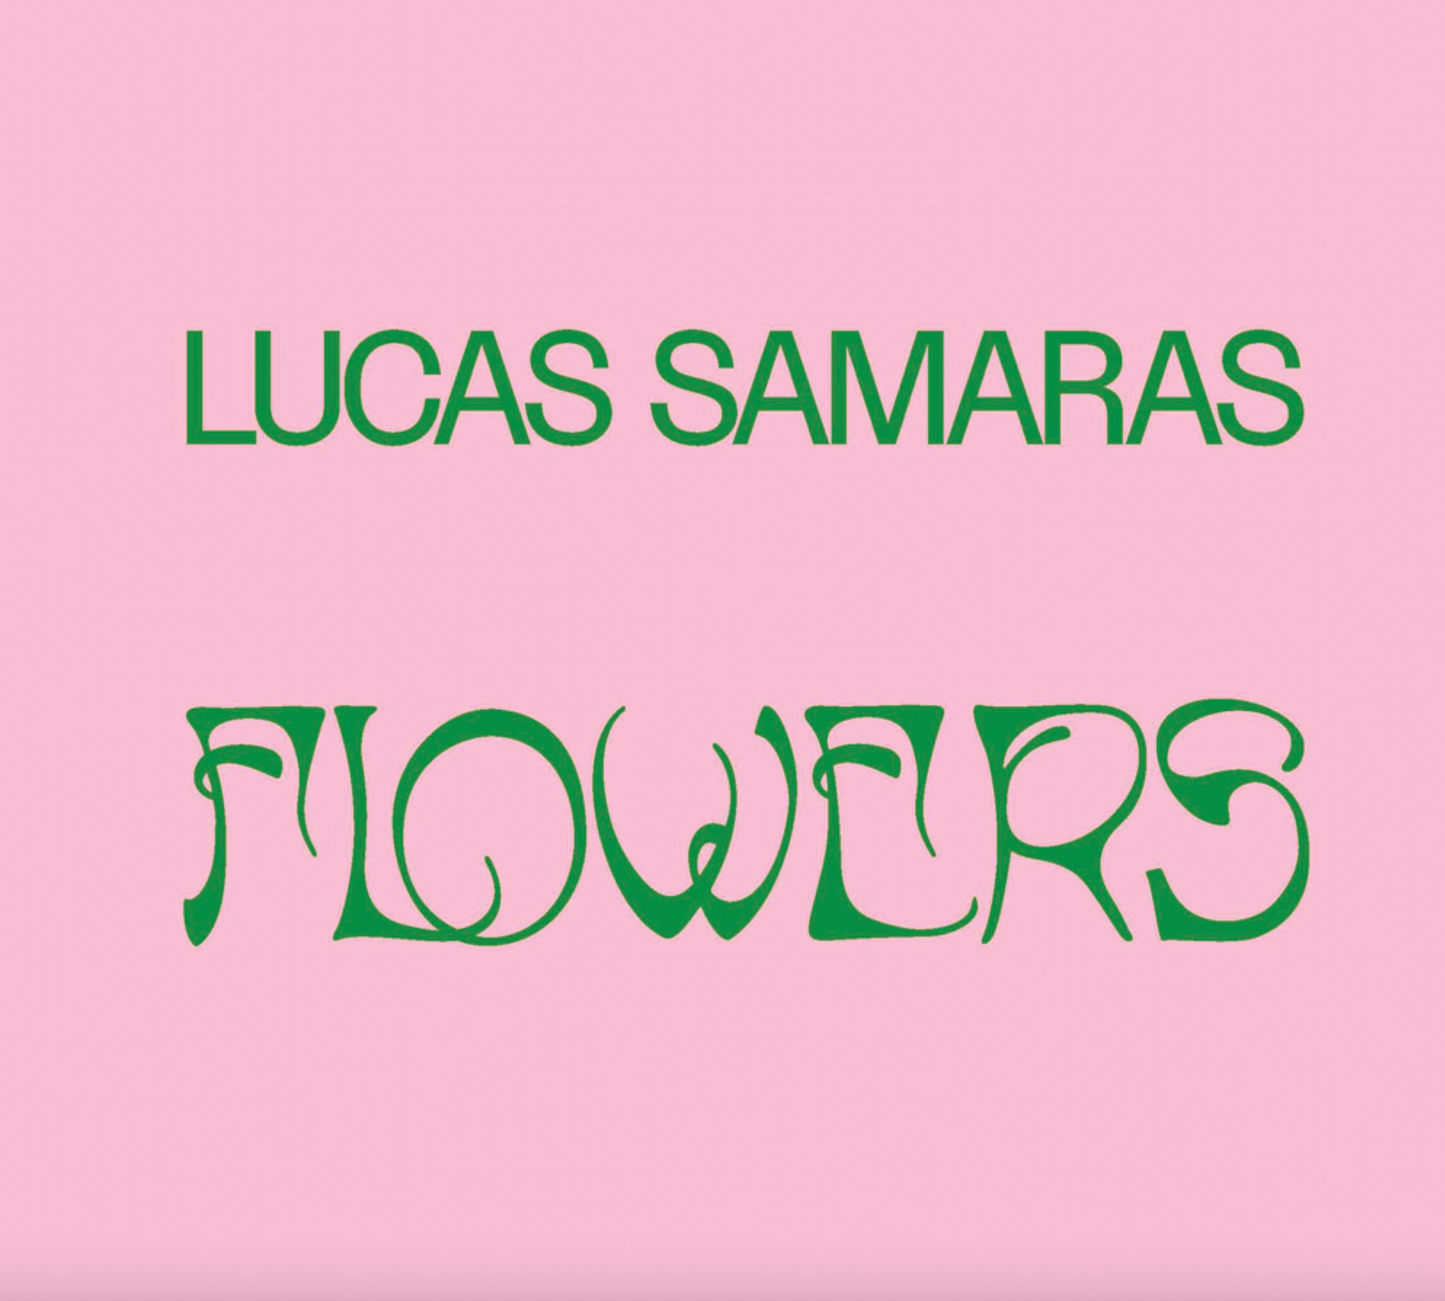 Lucas Samaras - Flowers